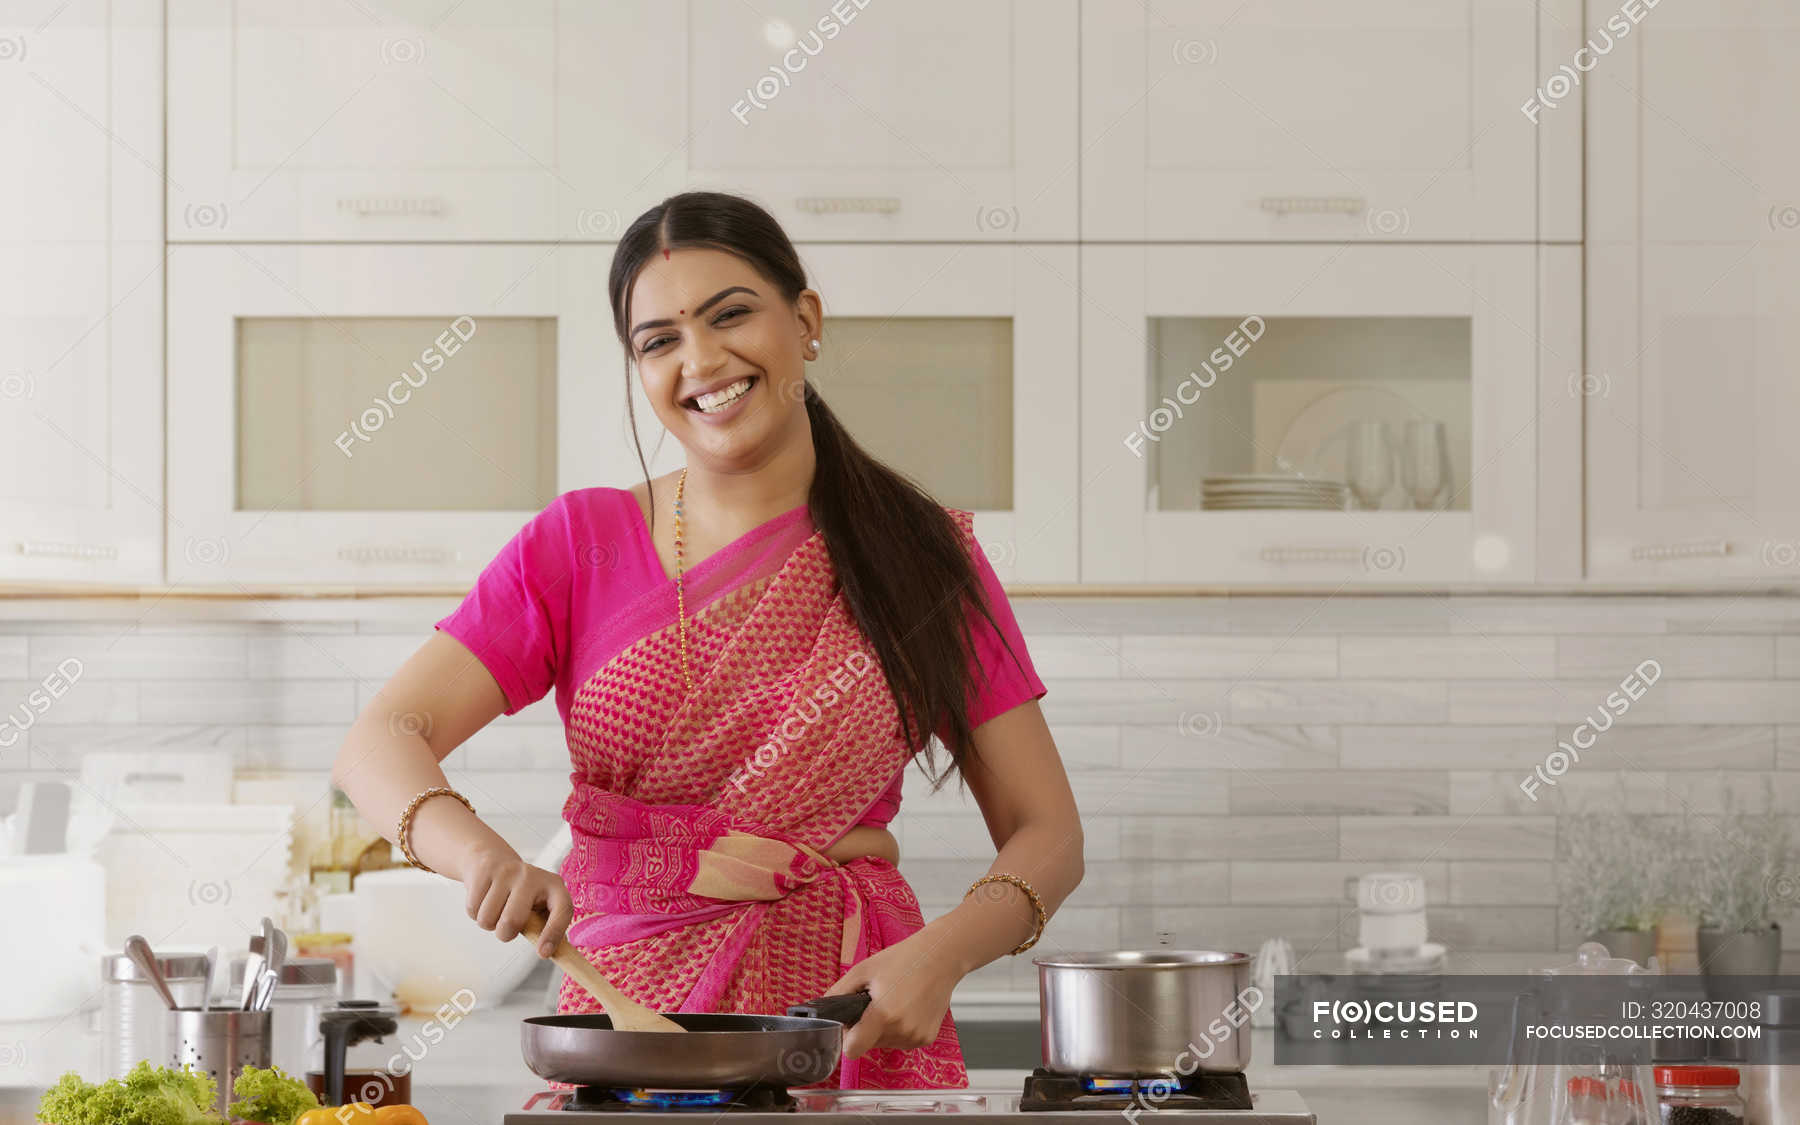 Focused 320437008 Stock Photo Woman Saree Cooking Kitchen 